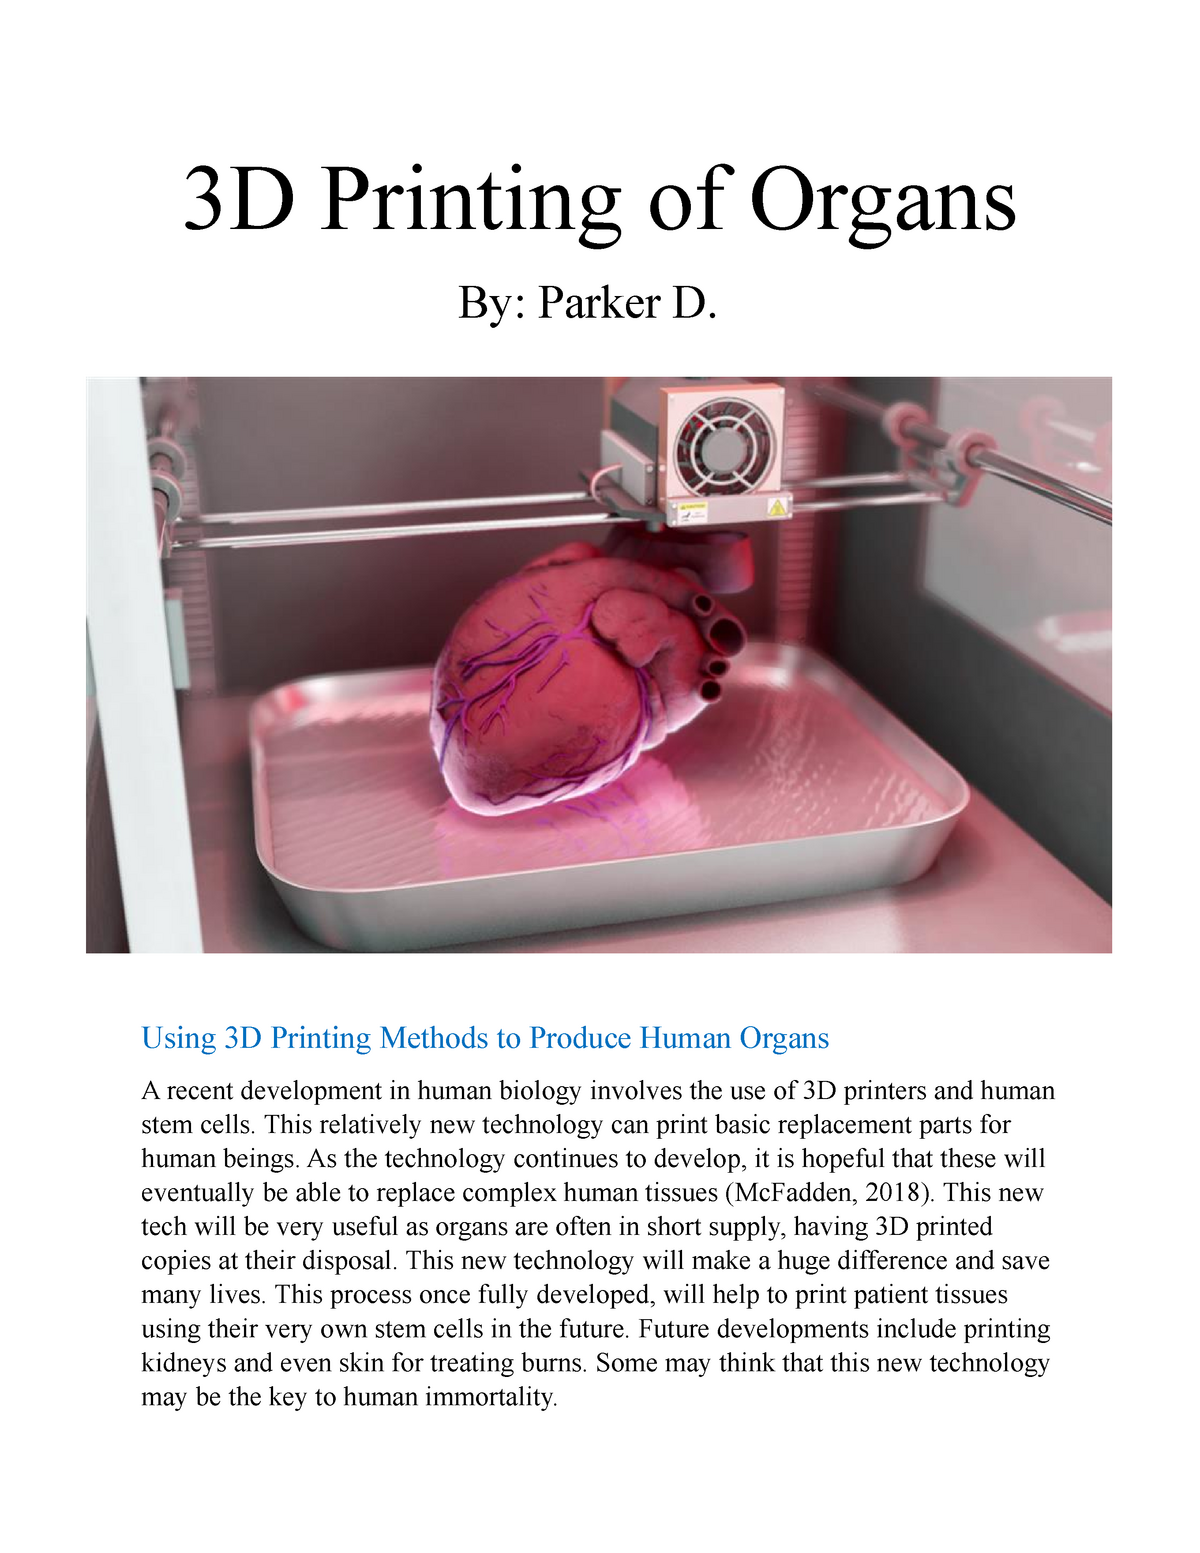 3d printing organs research paper